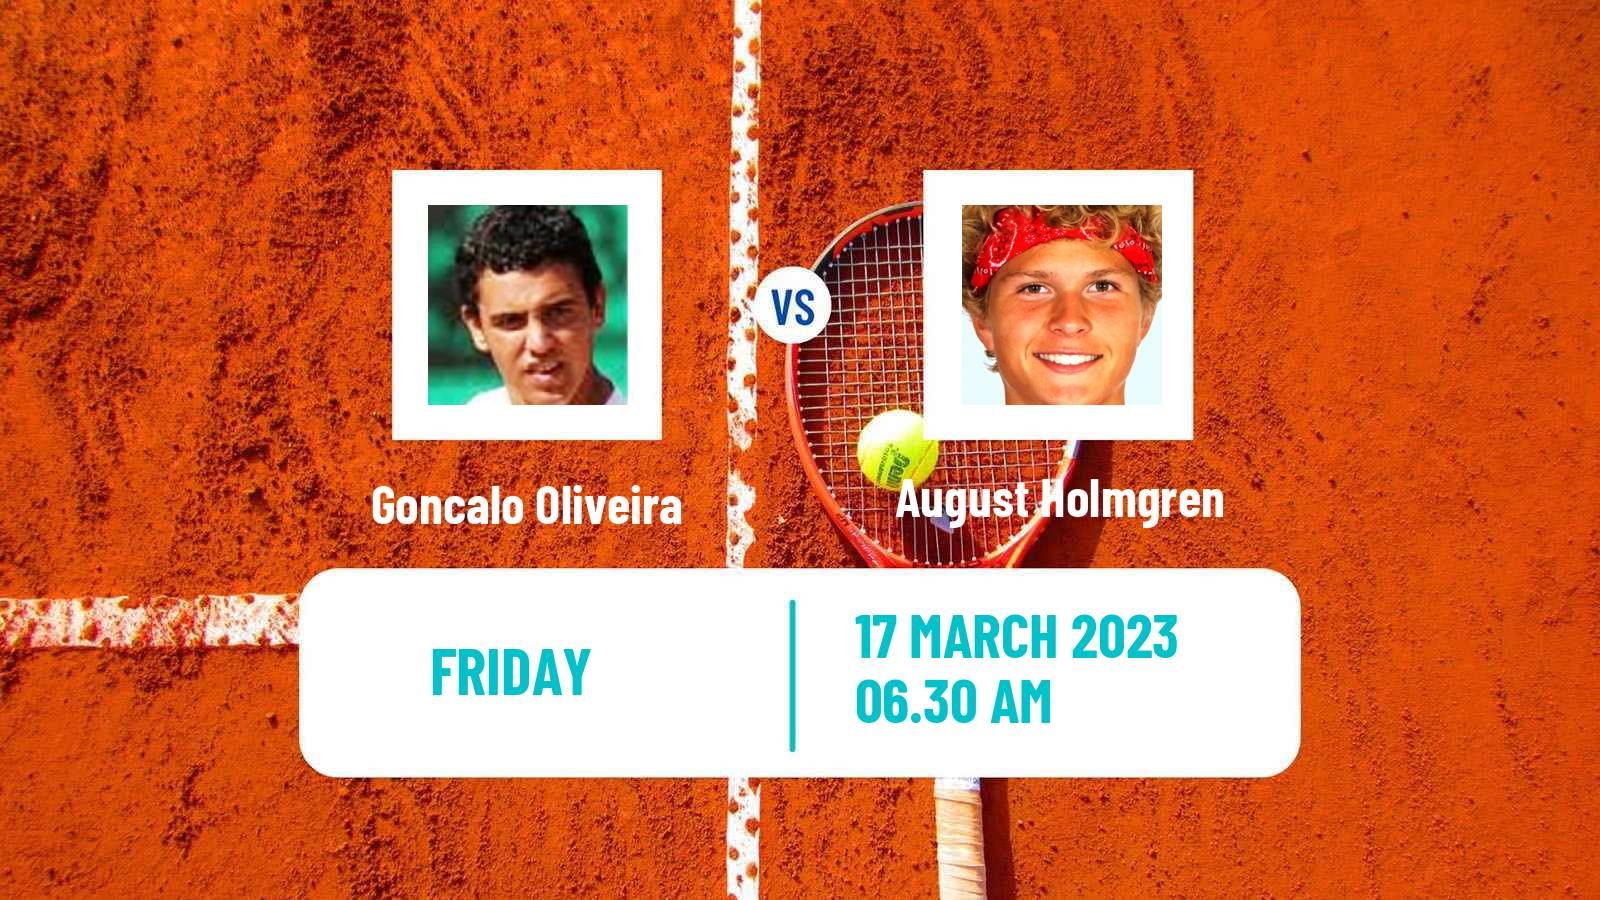 Tennis ITF Tournaments Goncalo Oliveira - August Holmgren